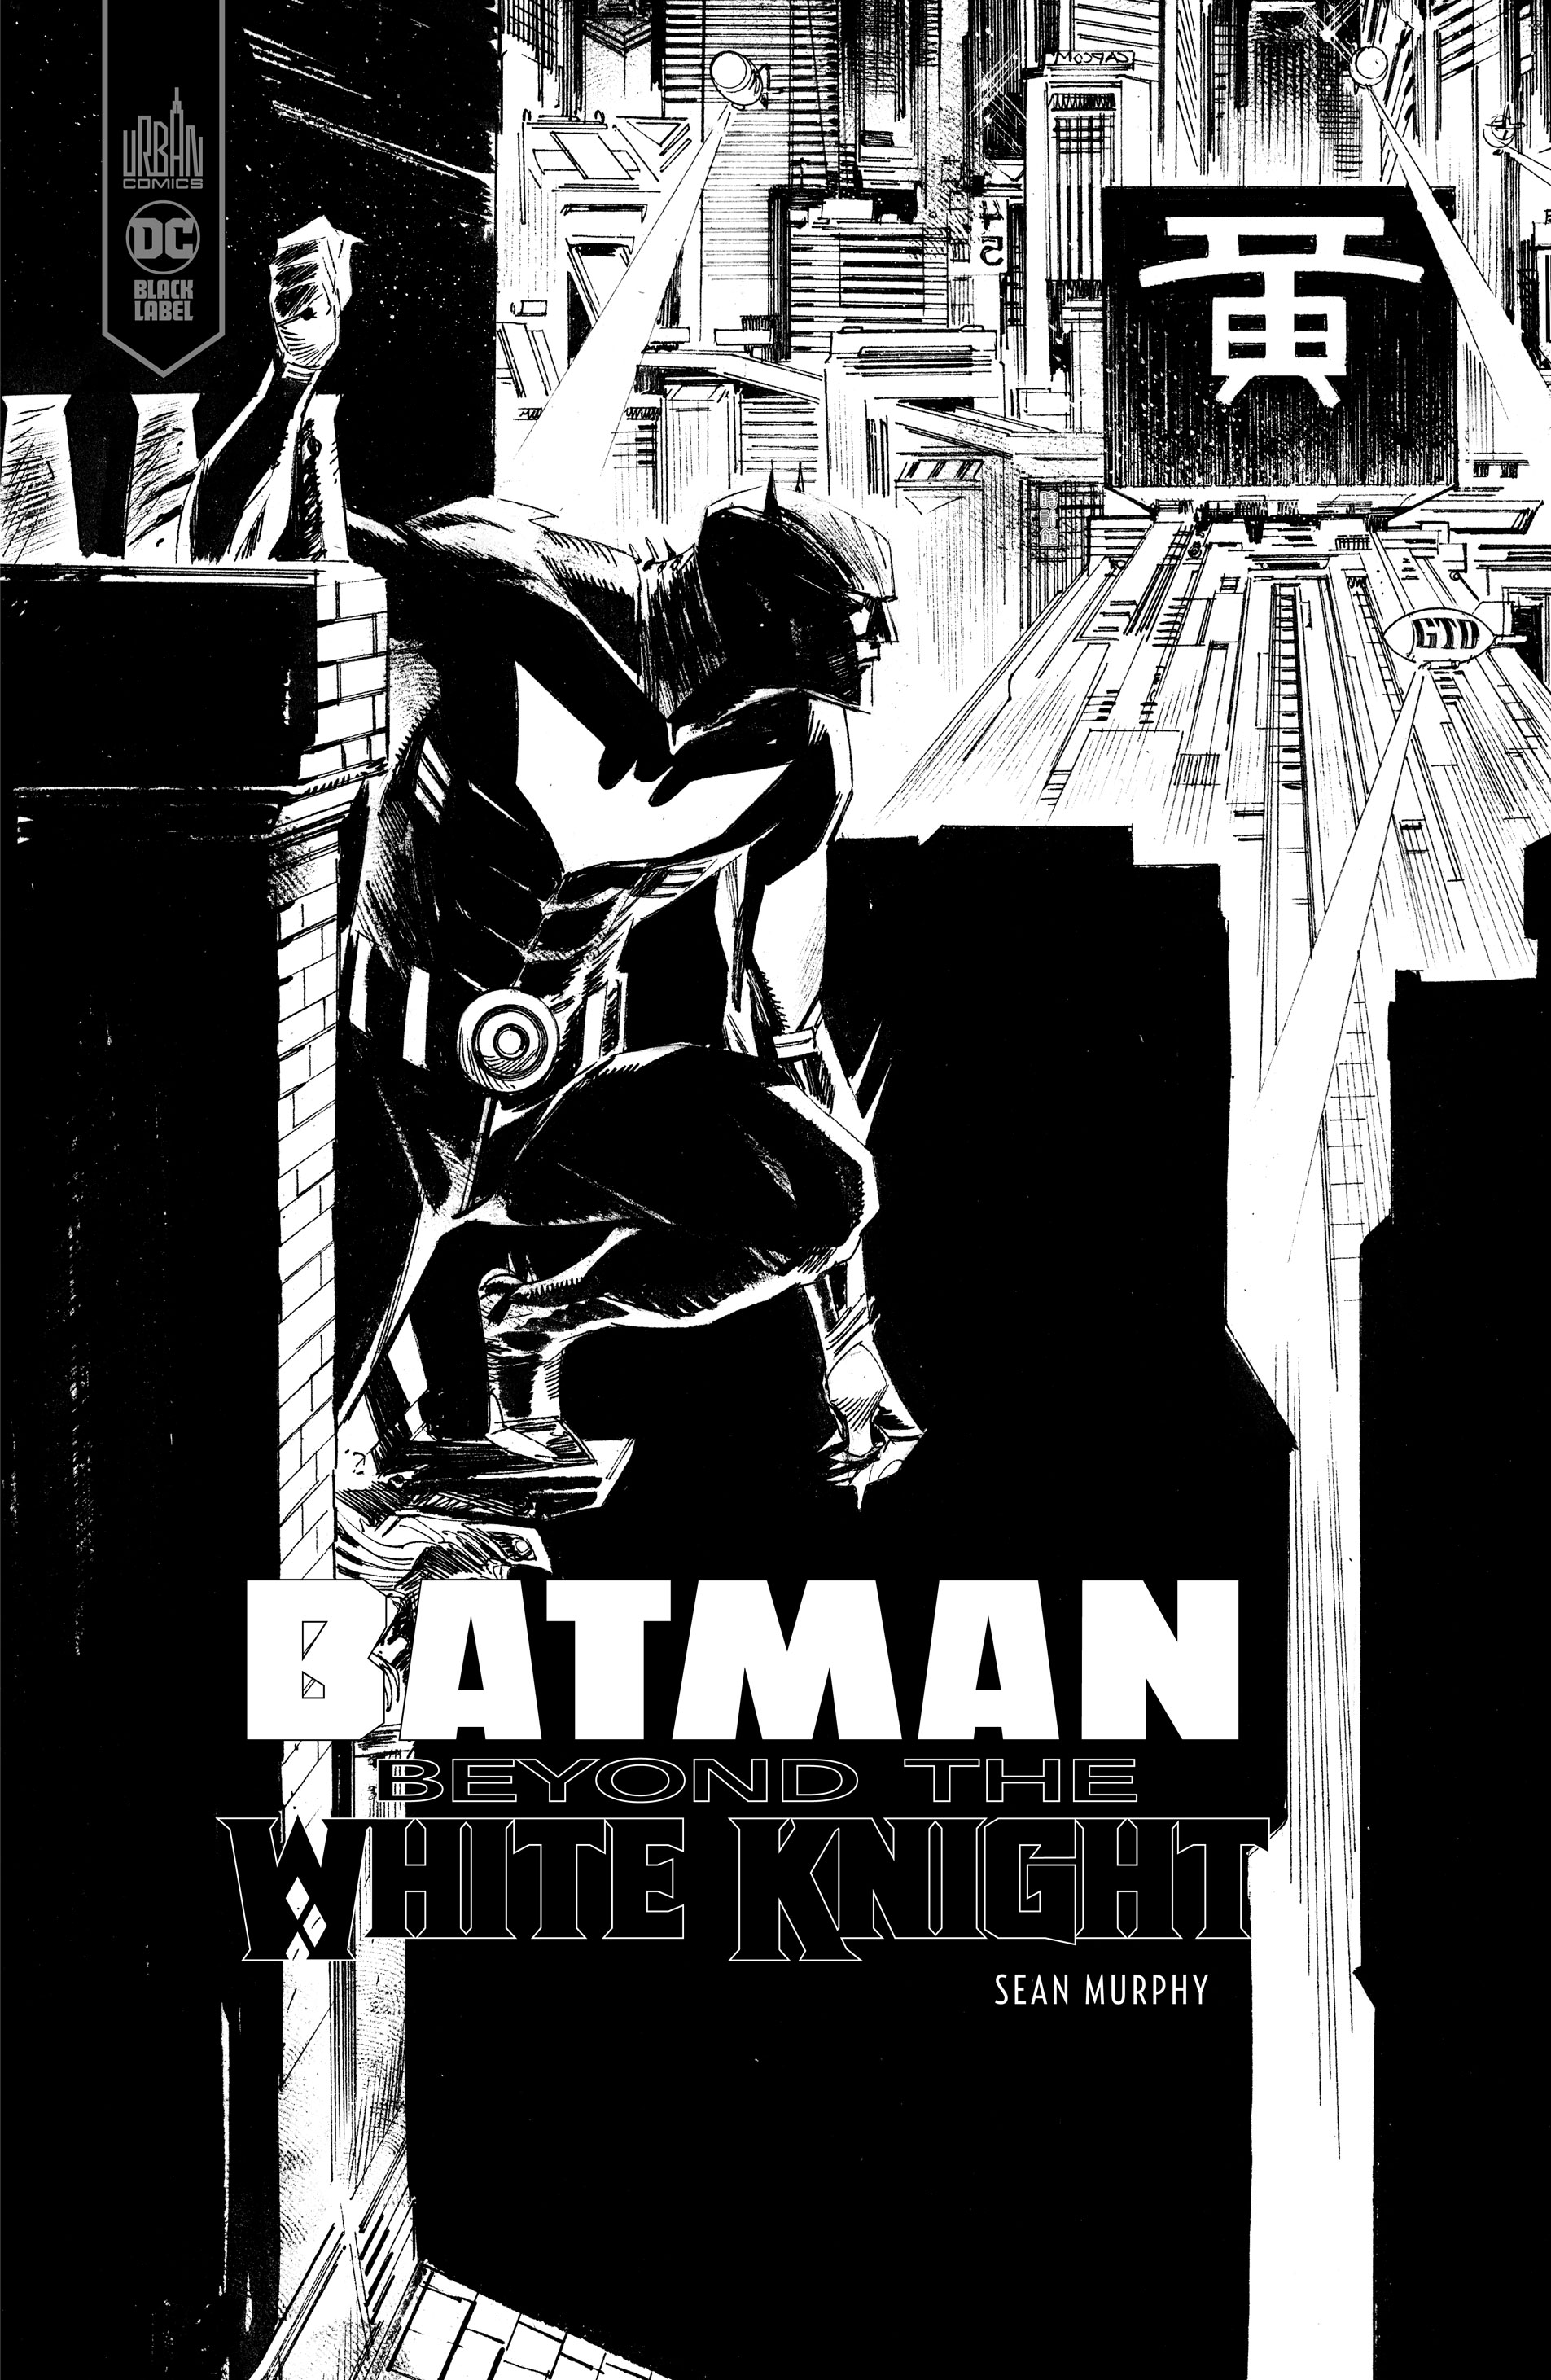 Batman Beyond the White Knight – Edition spéciale - couv